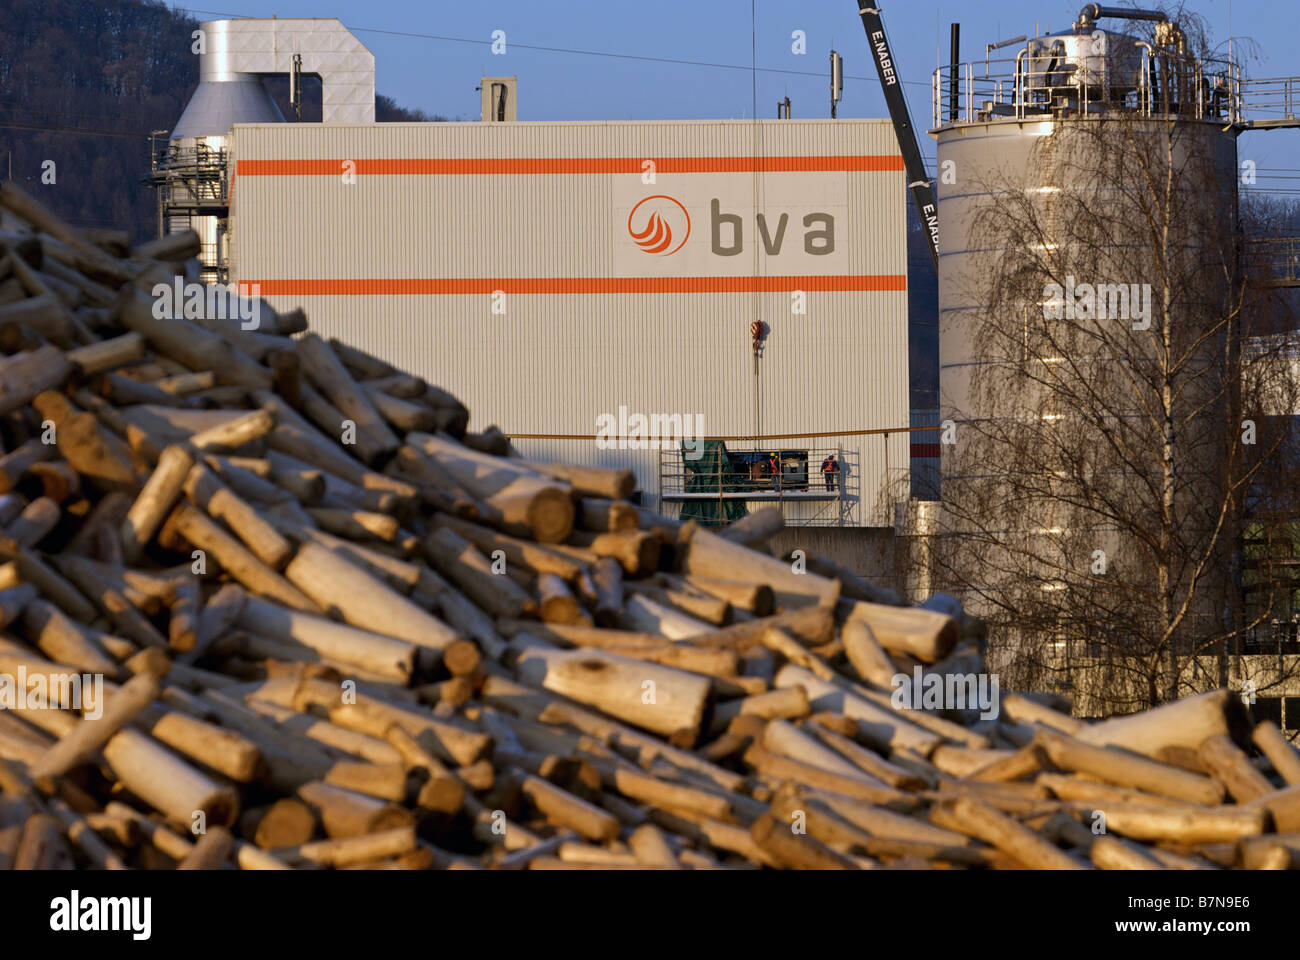 bva commercial wood-burning power station, Hagen, North Rhine-Westphalia, Germany. Stock Photo